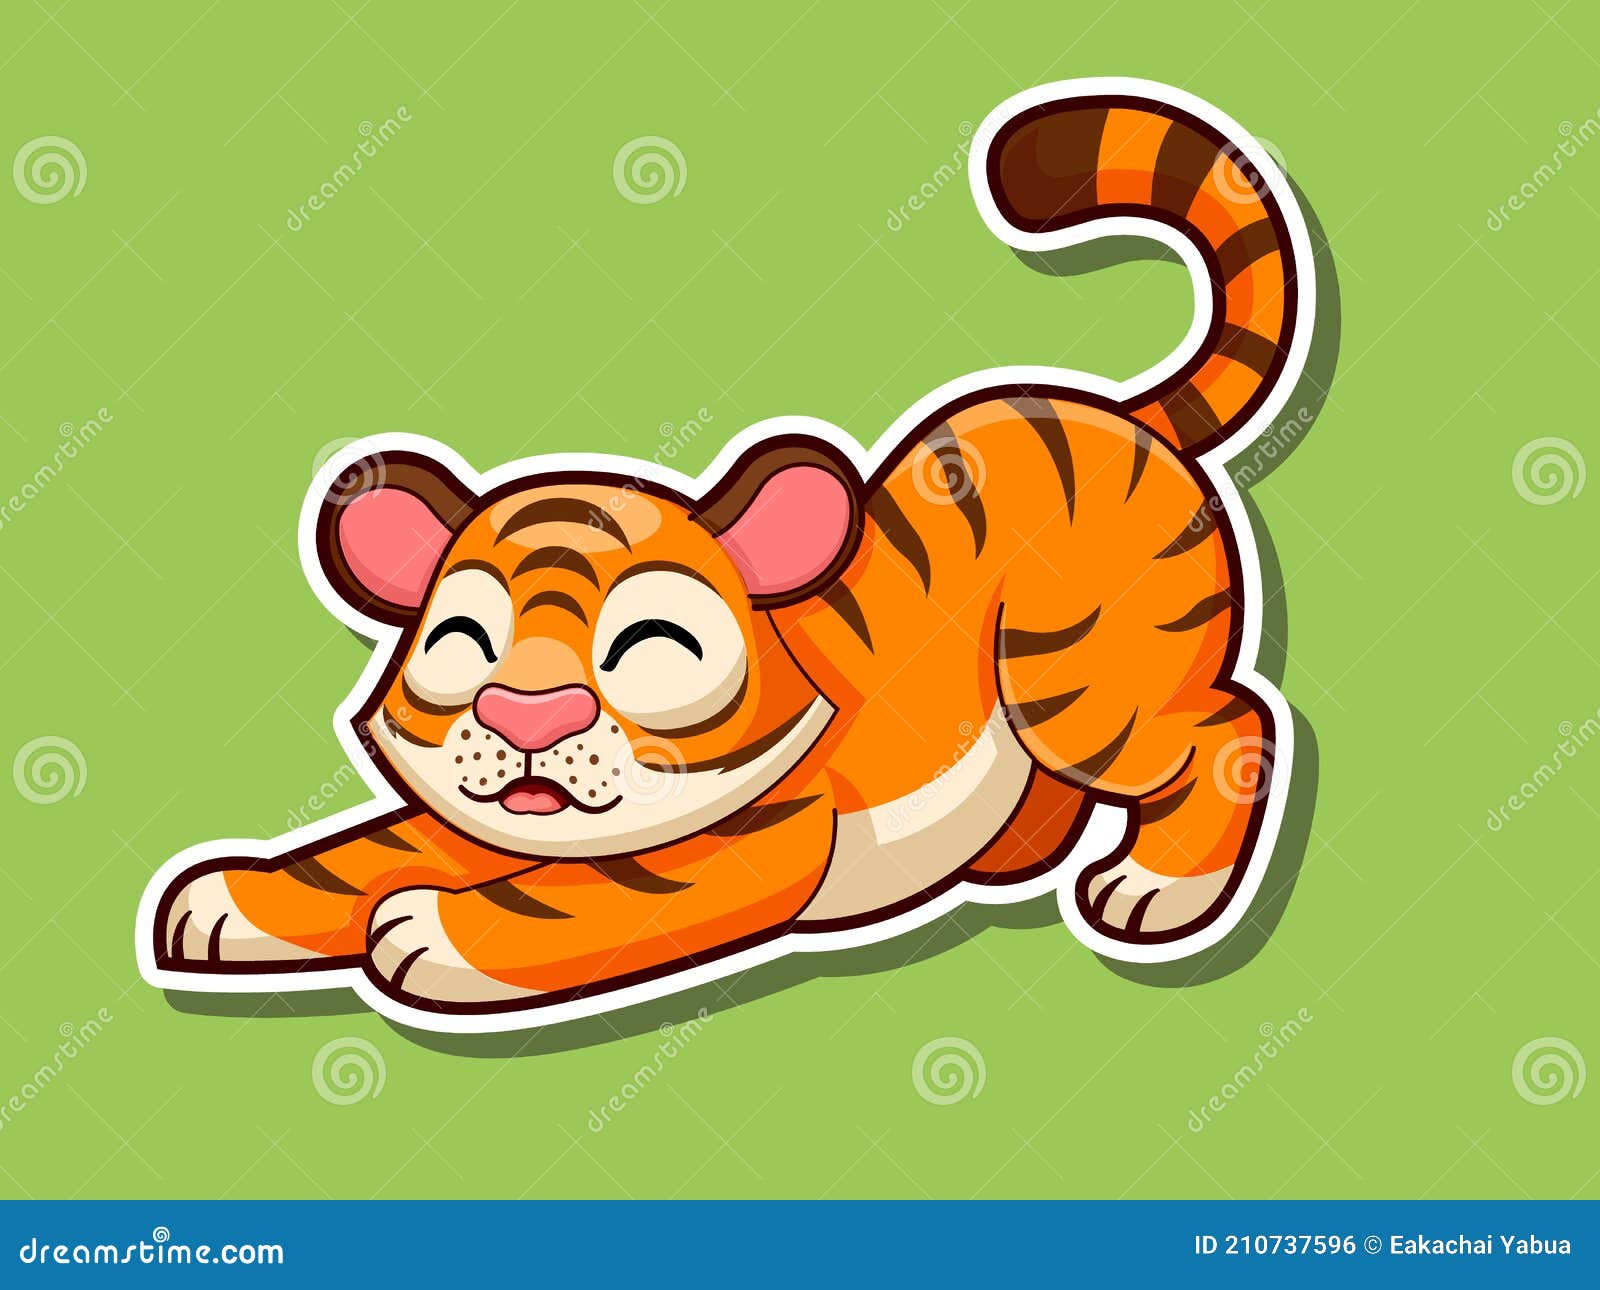 Cute Cartoon Tiger Sticker Mascot Animal Character. Vector Art Illustration  Stock Vector - Illustration of character, icon: 210737596